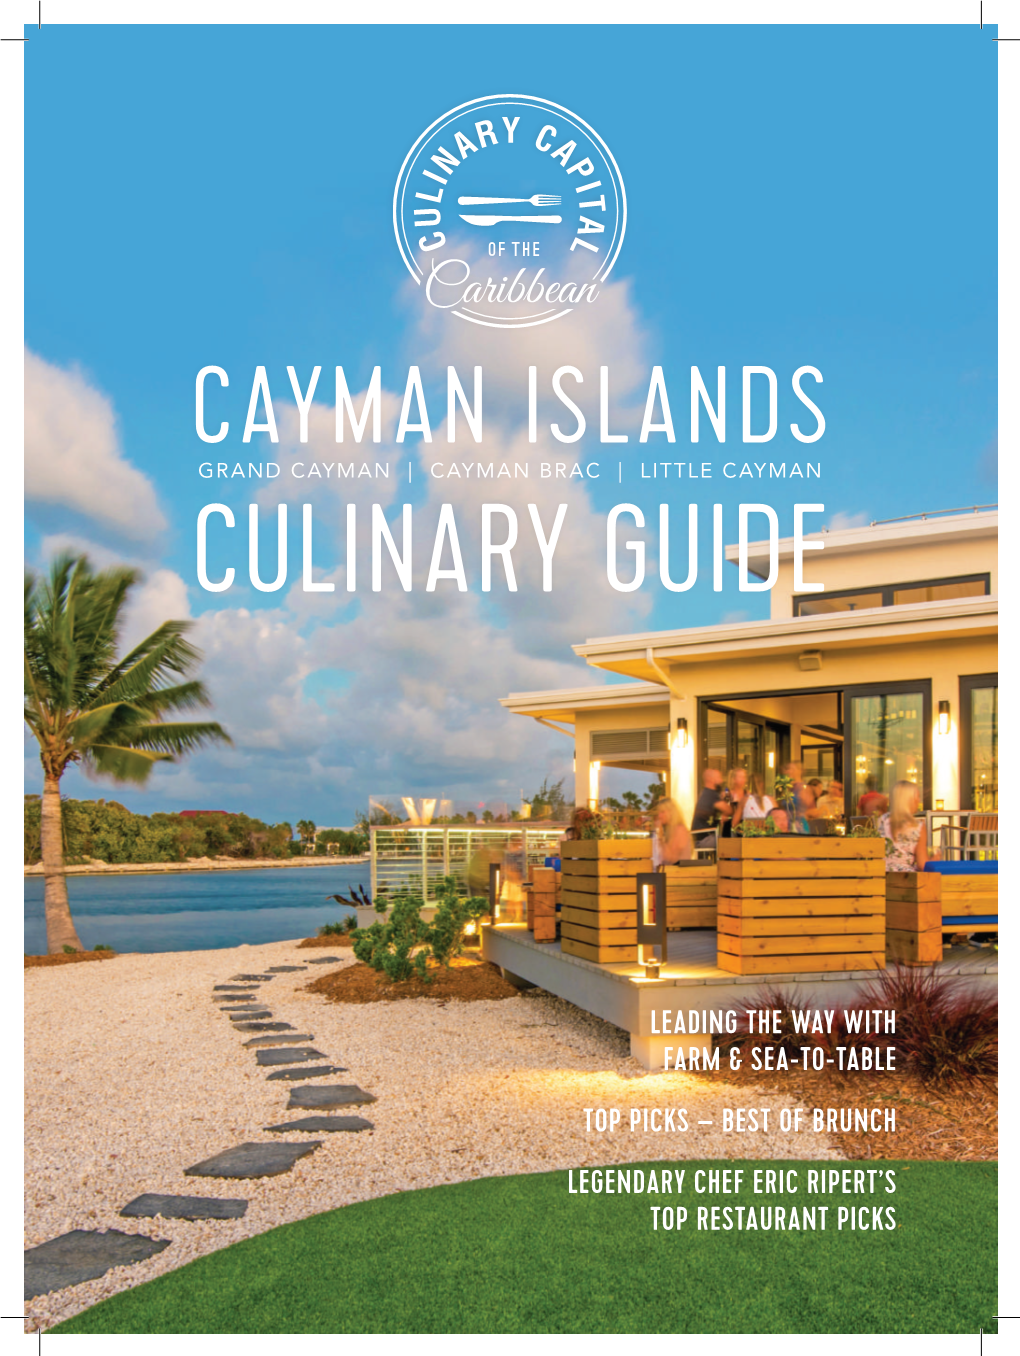 Cayman Islands Culinary Guide